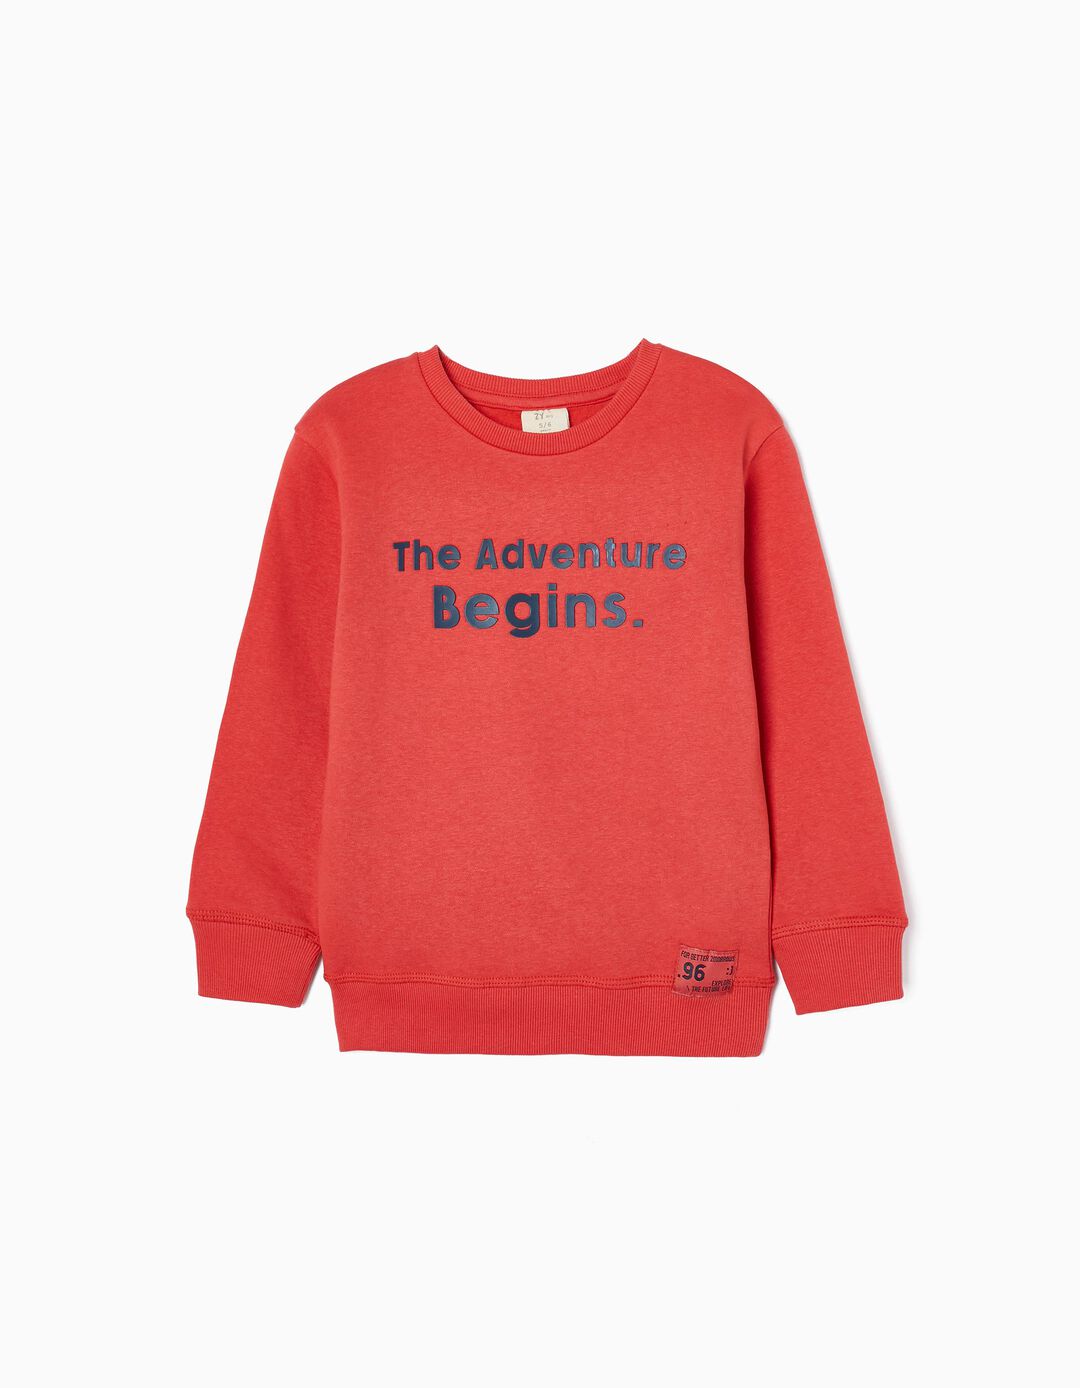 Cotton Sweatshirt for Boys, Red